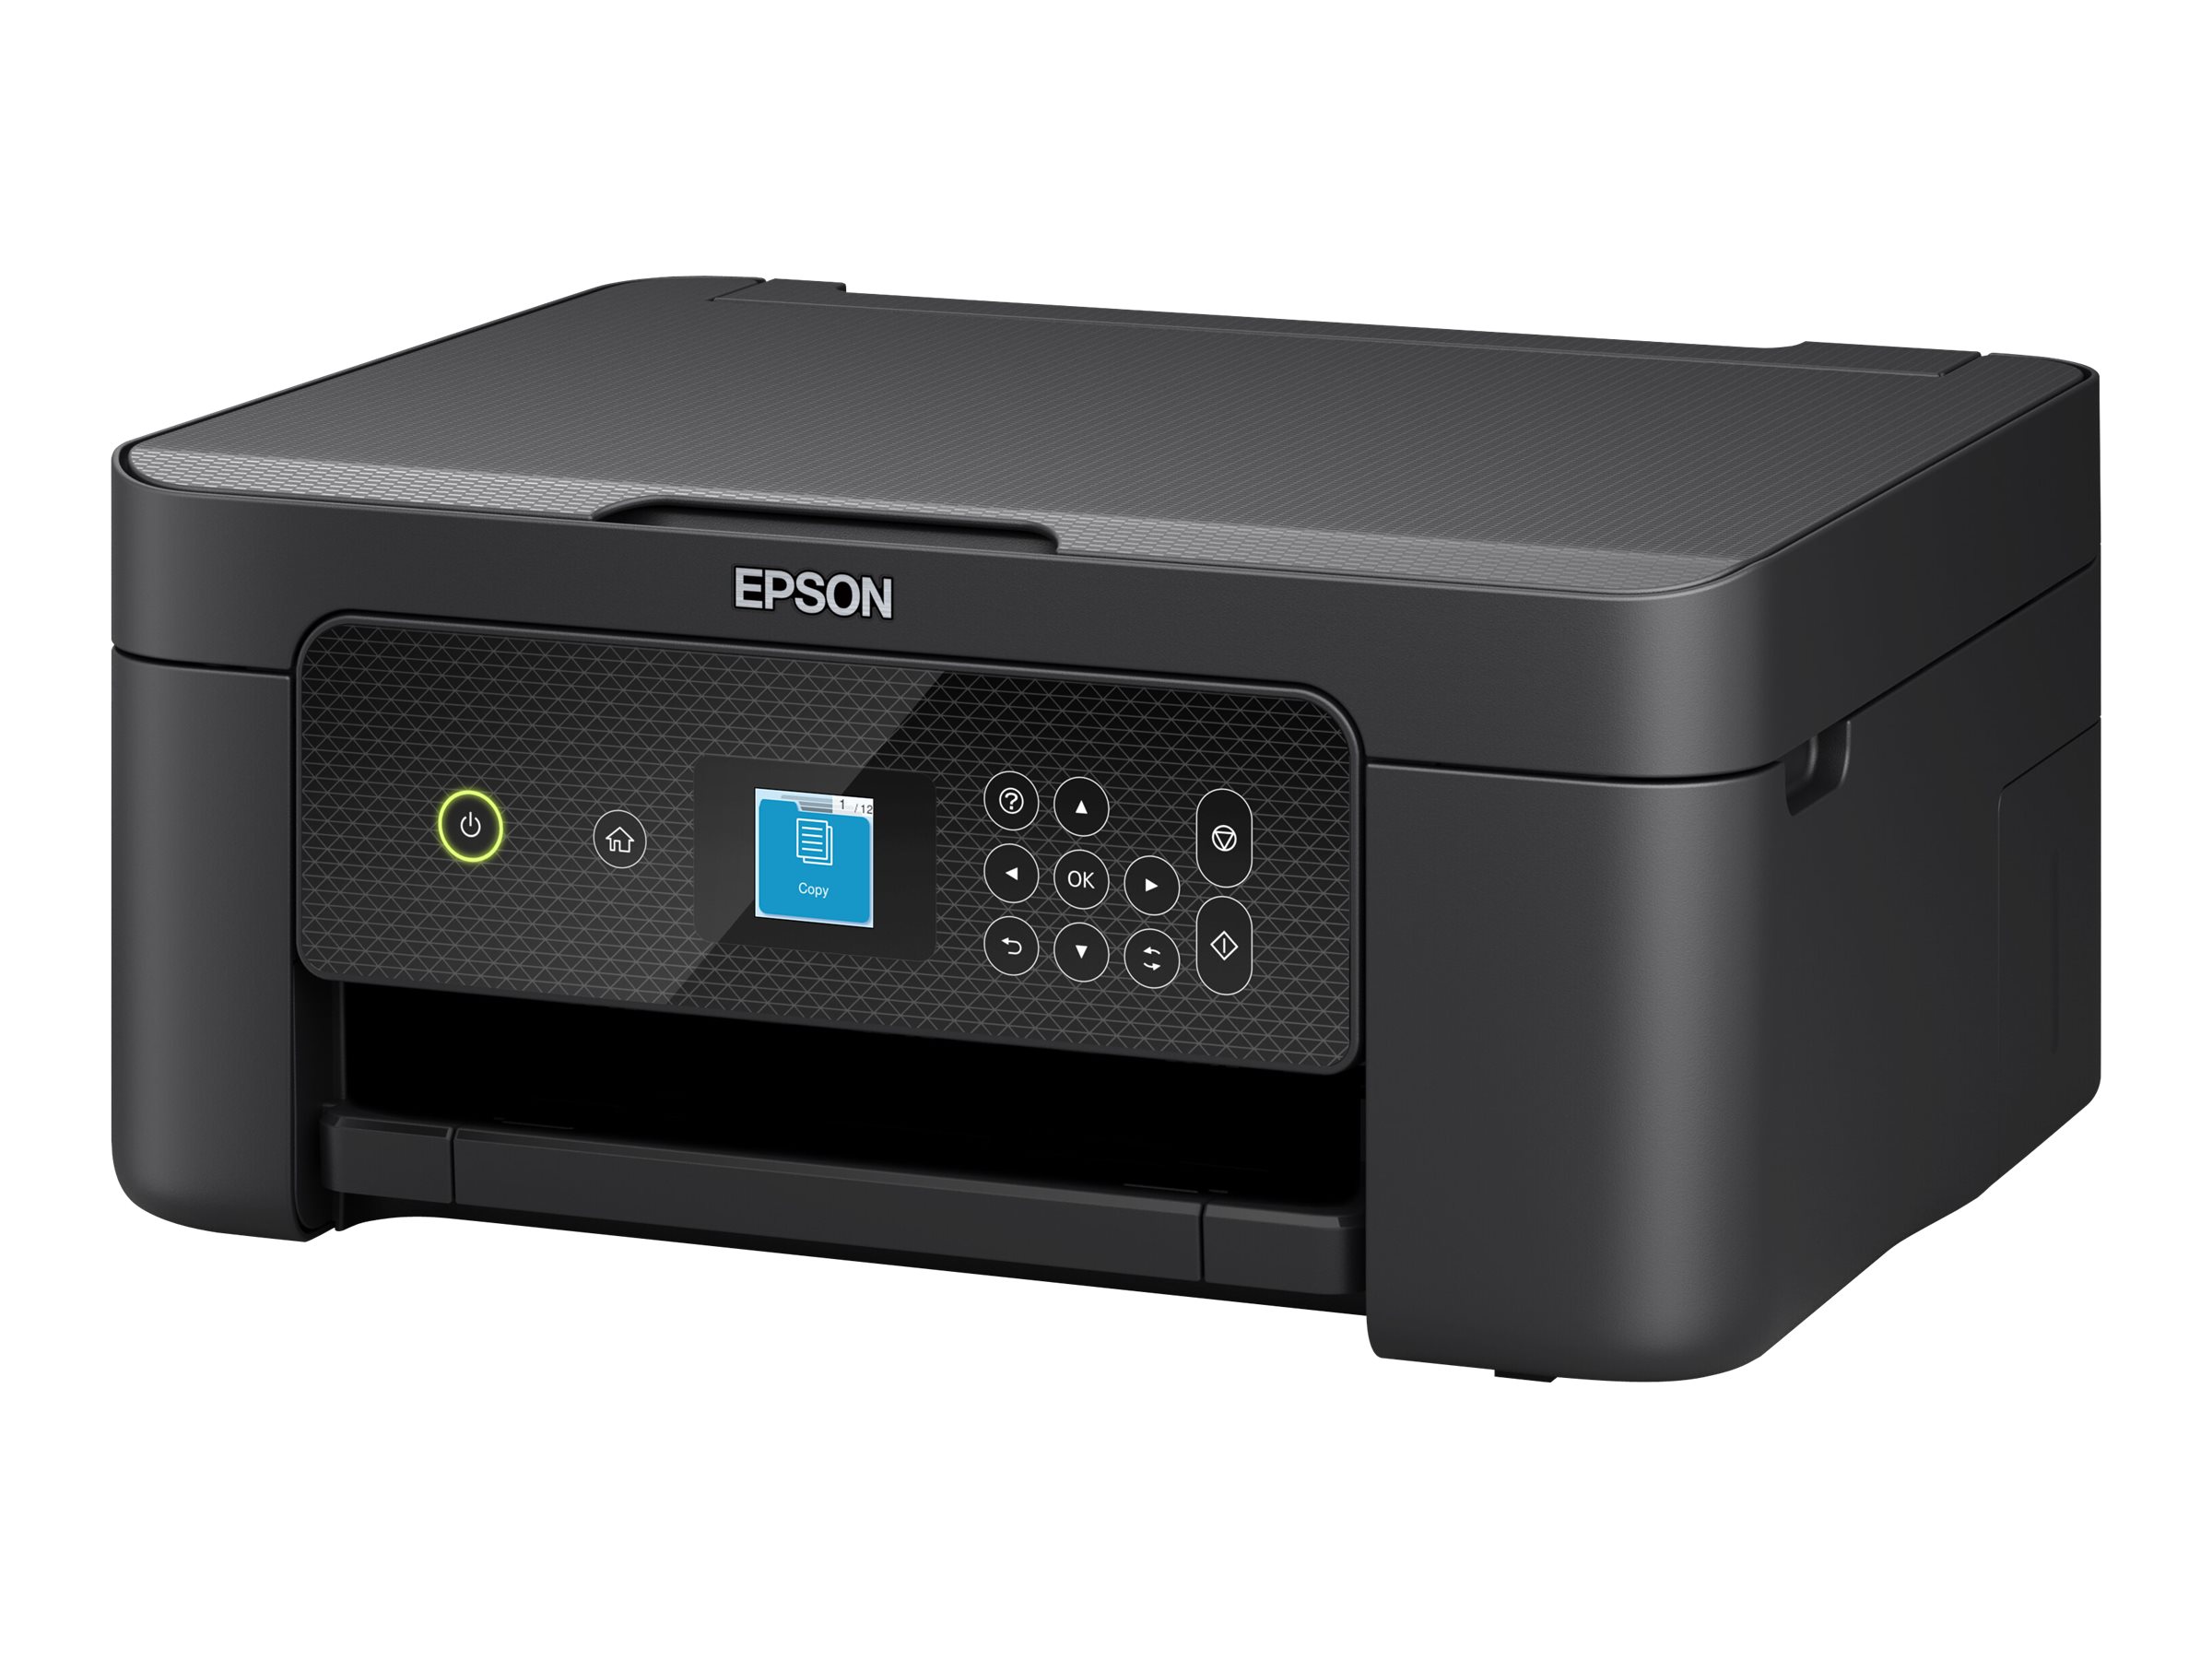 Imprimante multifonction Epson XP-3200 Noir - Imprimante